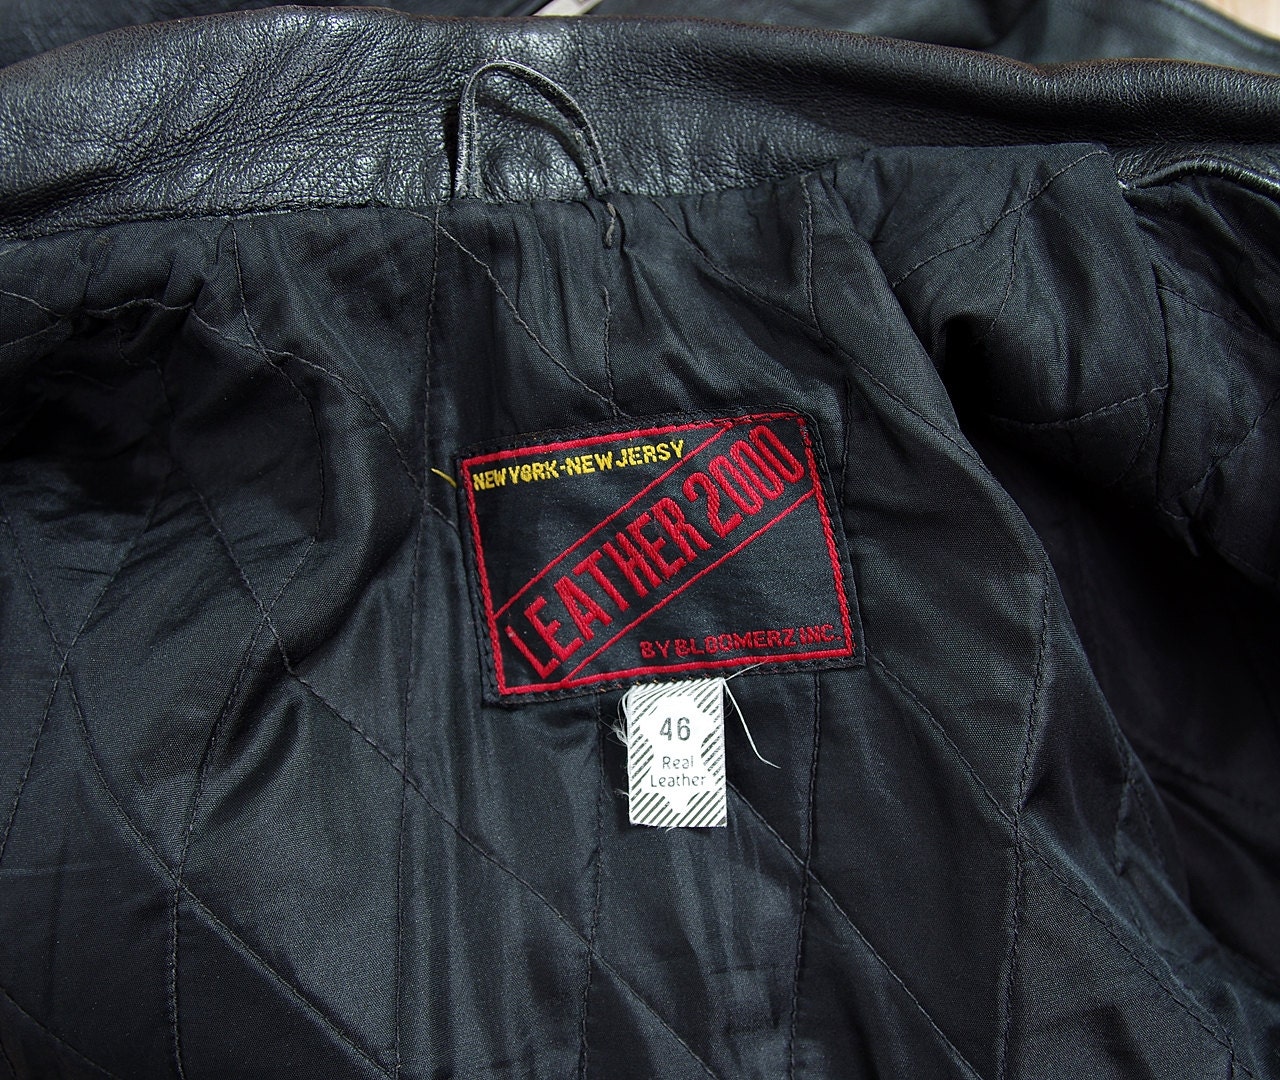 80s BLOOMERZ INC. Motorcycle Leather Jacket / New York New